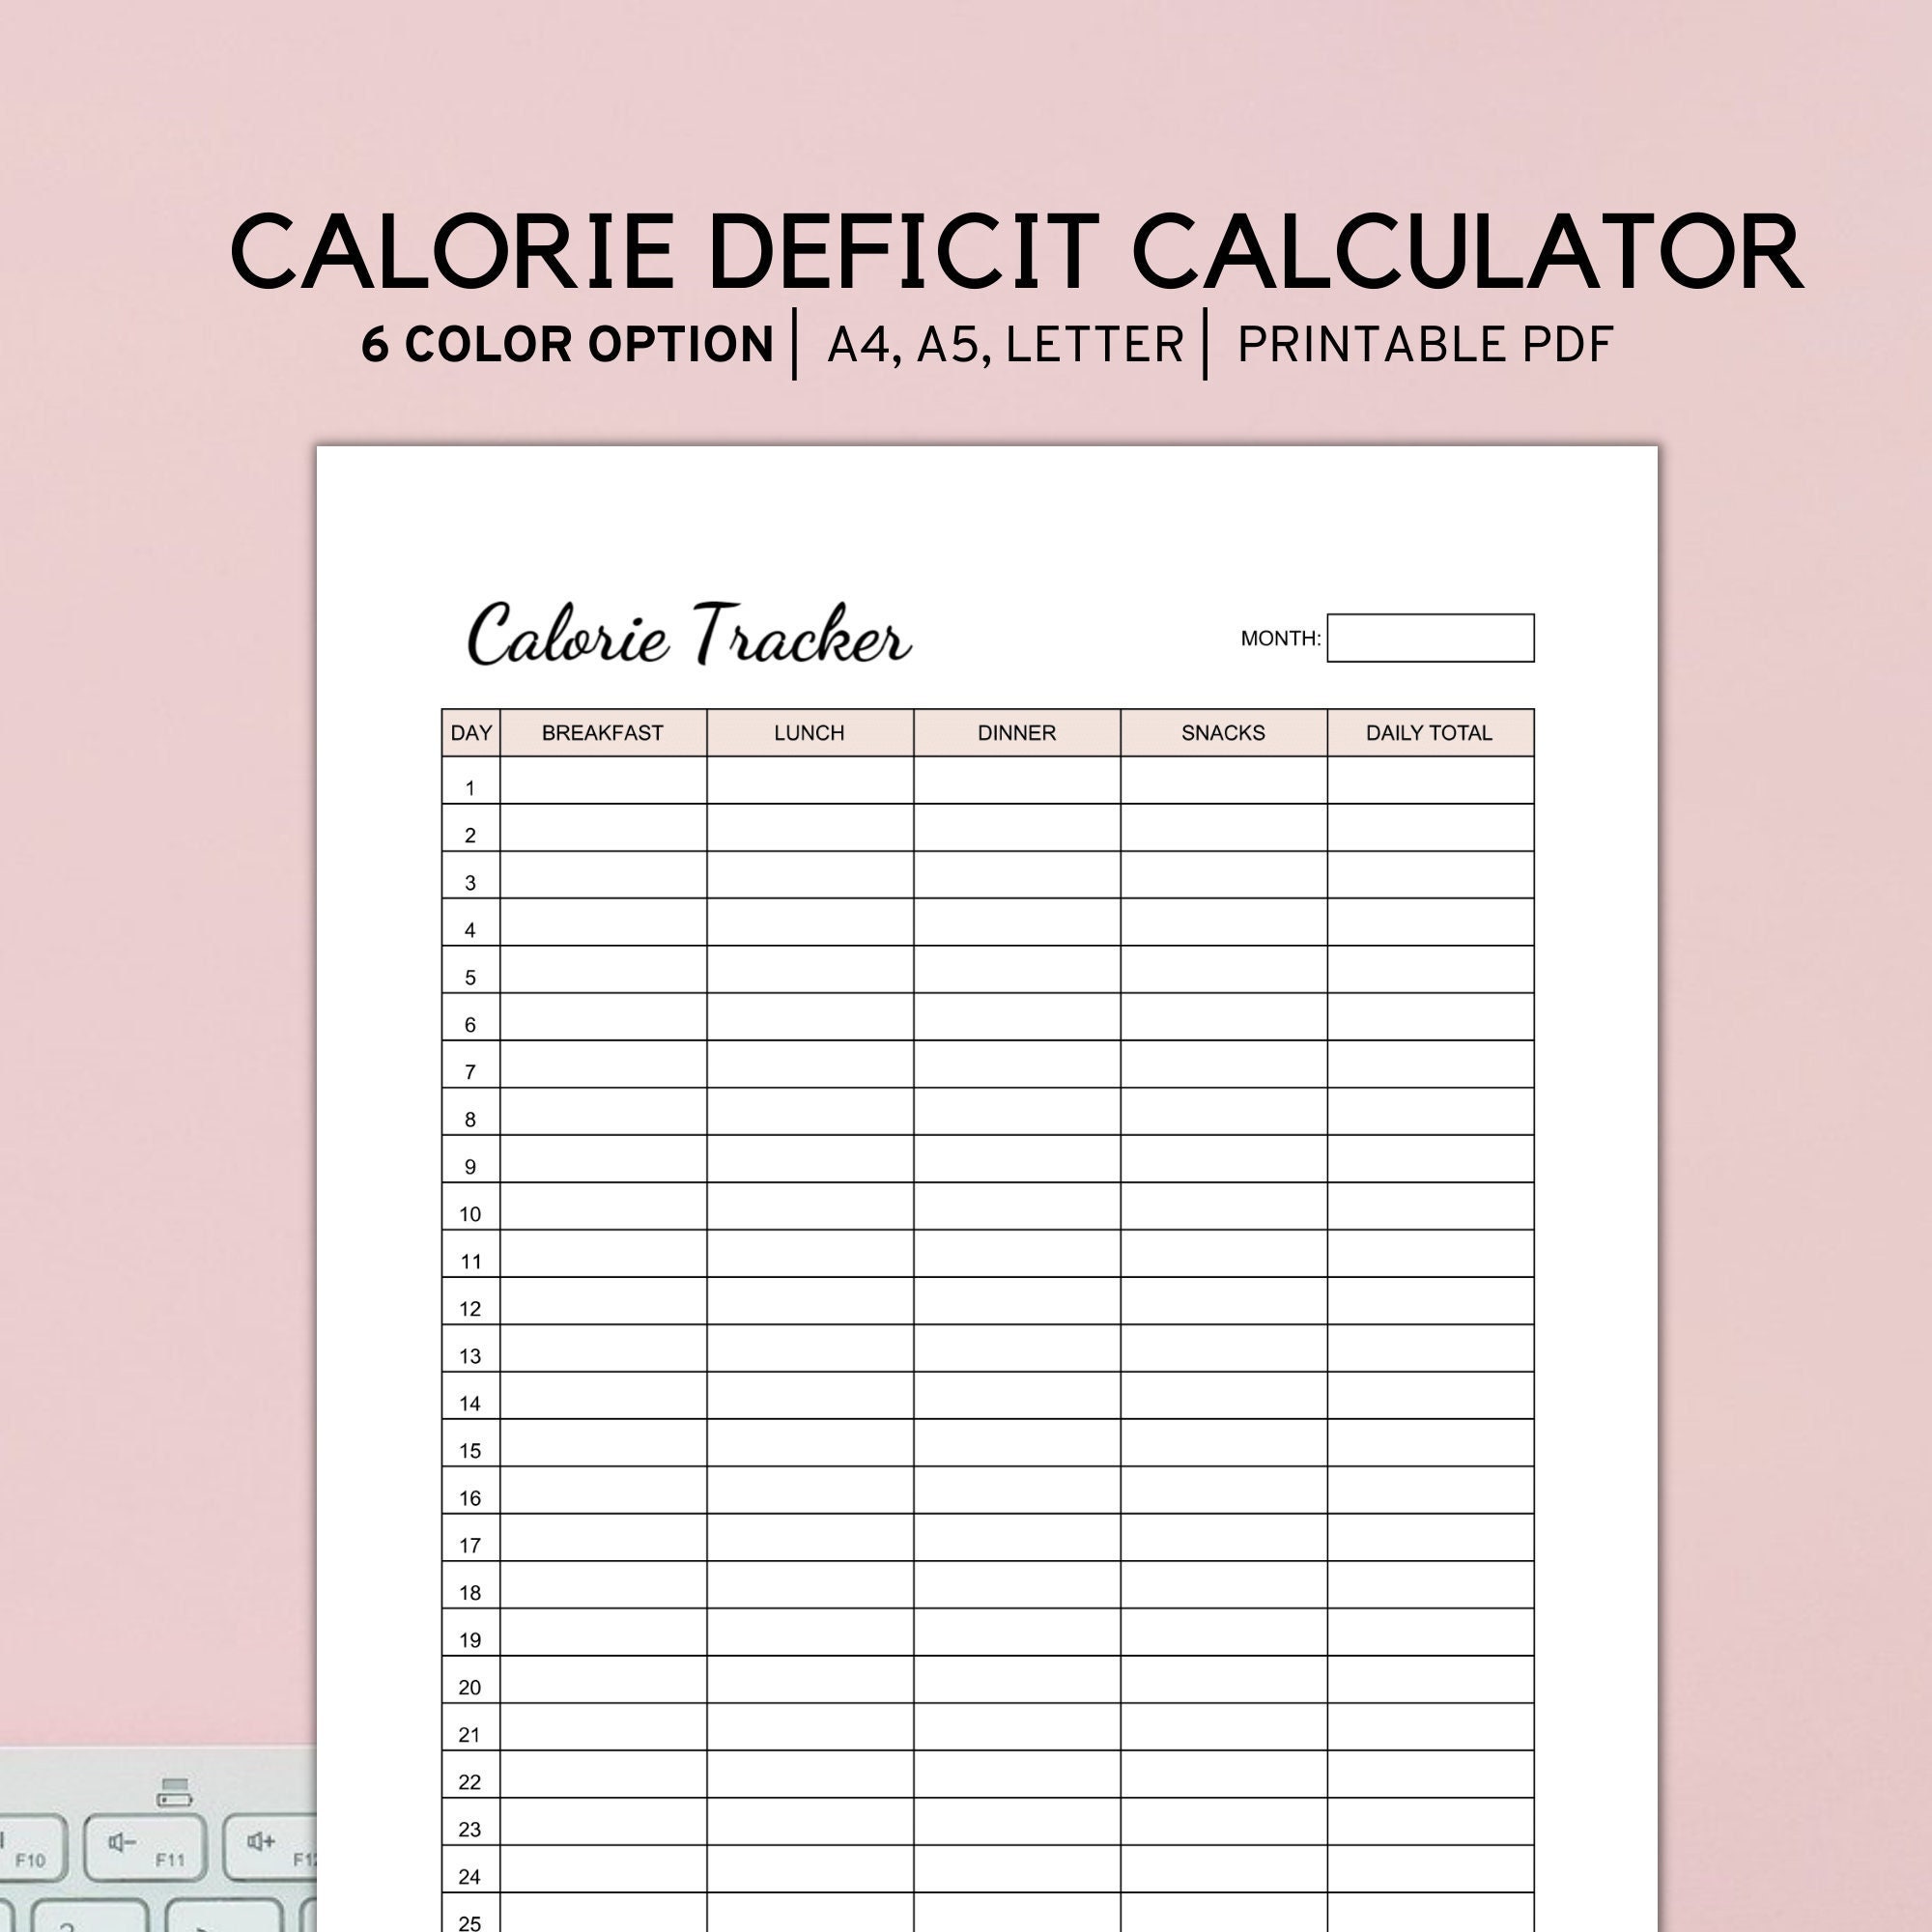 Breast Stroke Calorie Calculator - Calculator Academy, calculate breast  weight